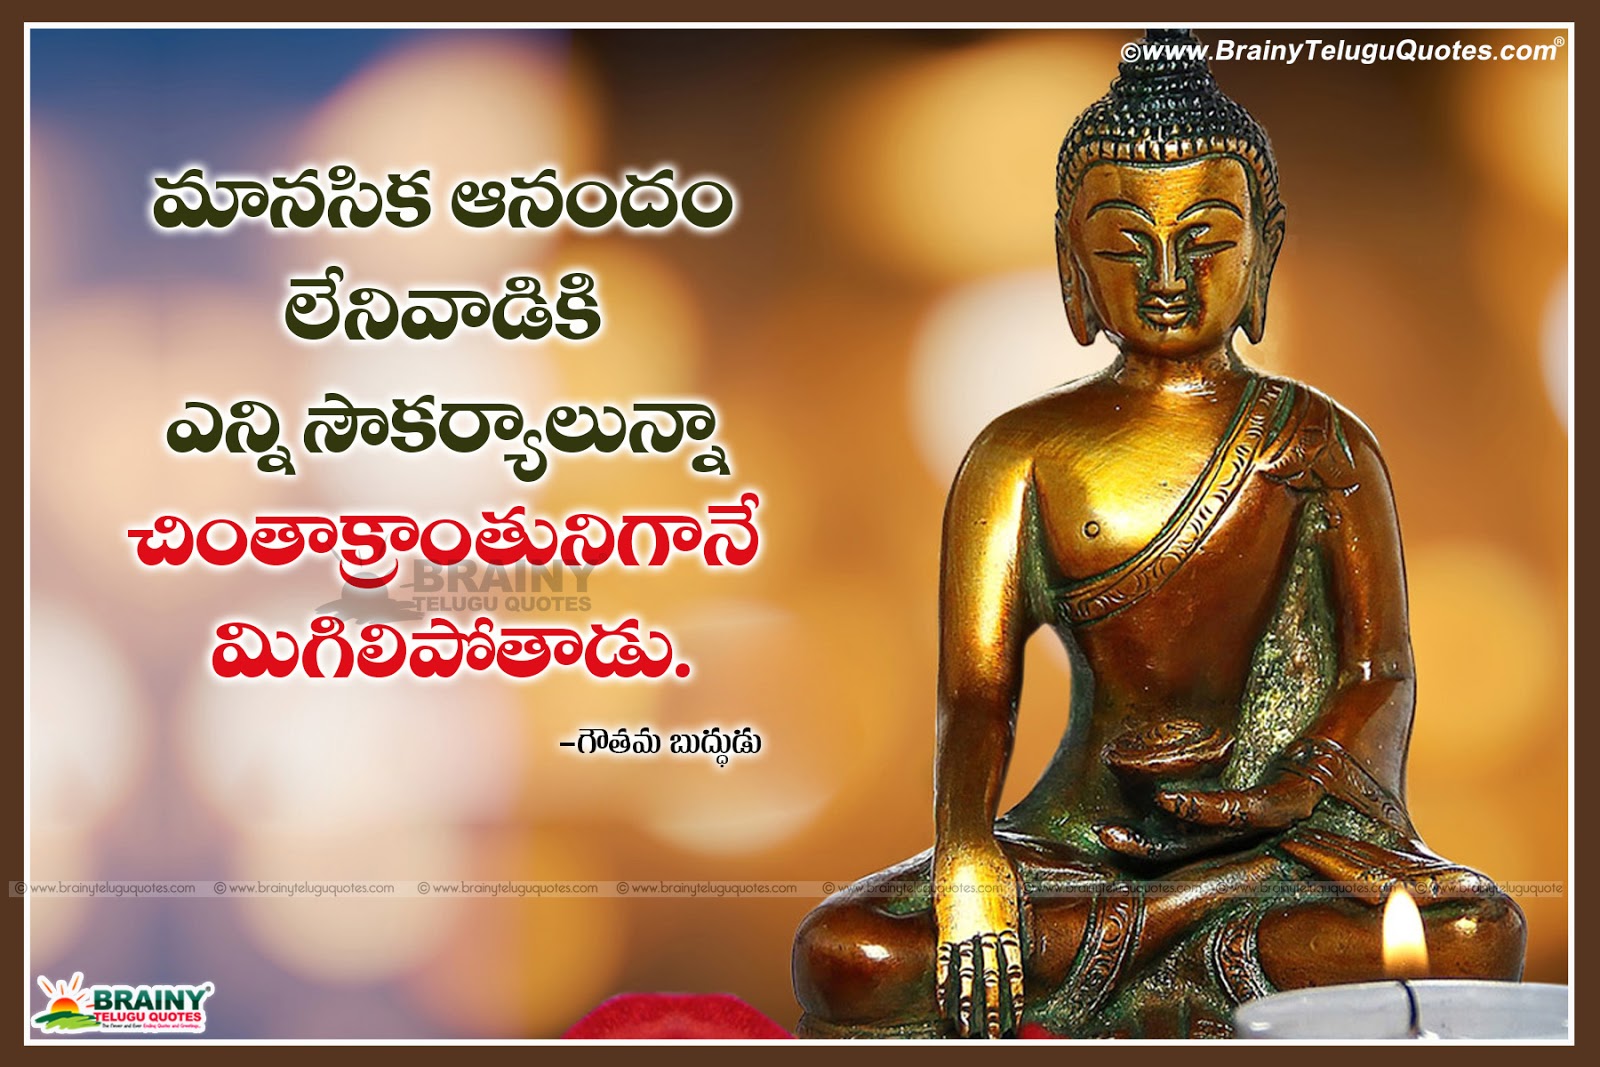 Telugu Nice Inspiring Gautama Buddha Life Quotations sms messages